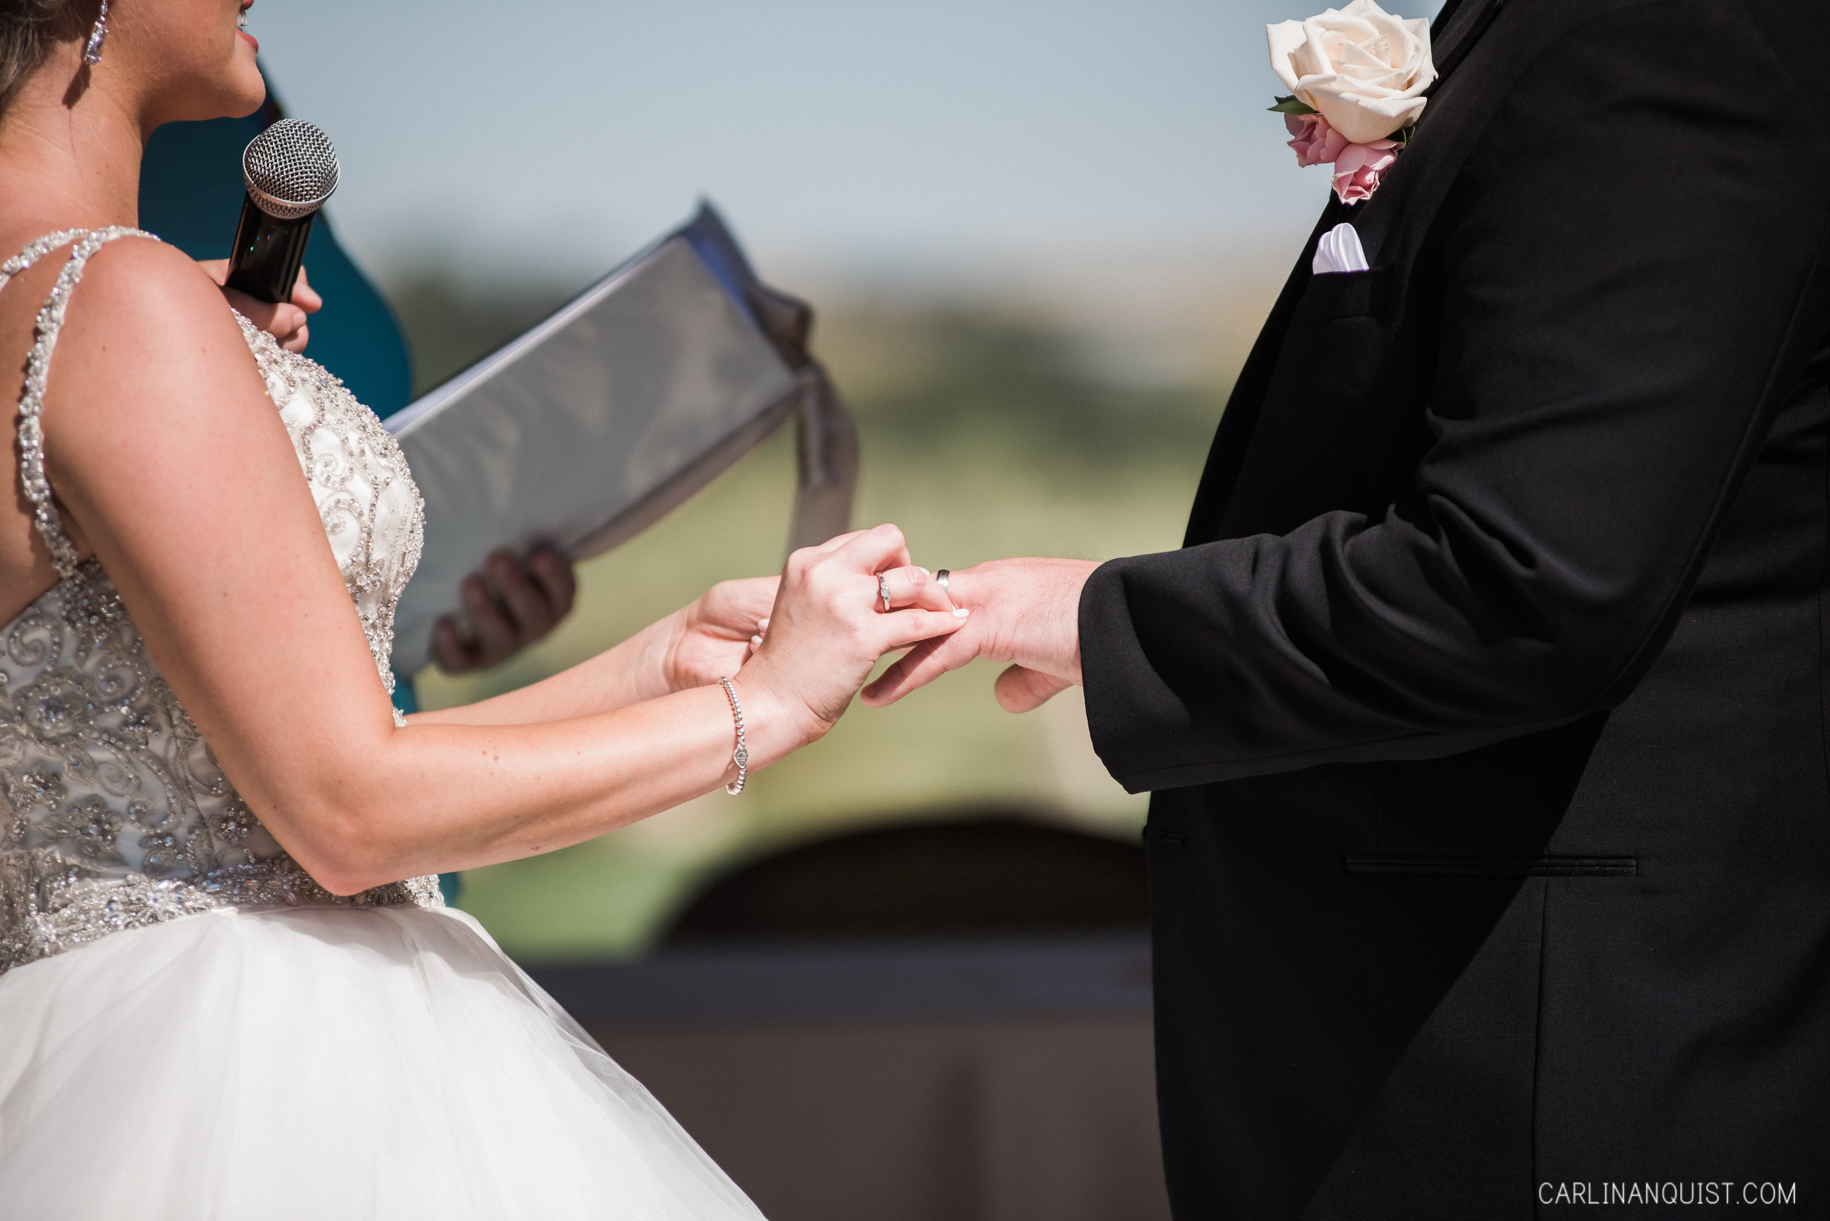 Carlin Anquist | Apple Creek Wedding Photographer